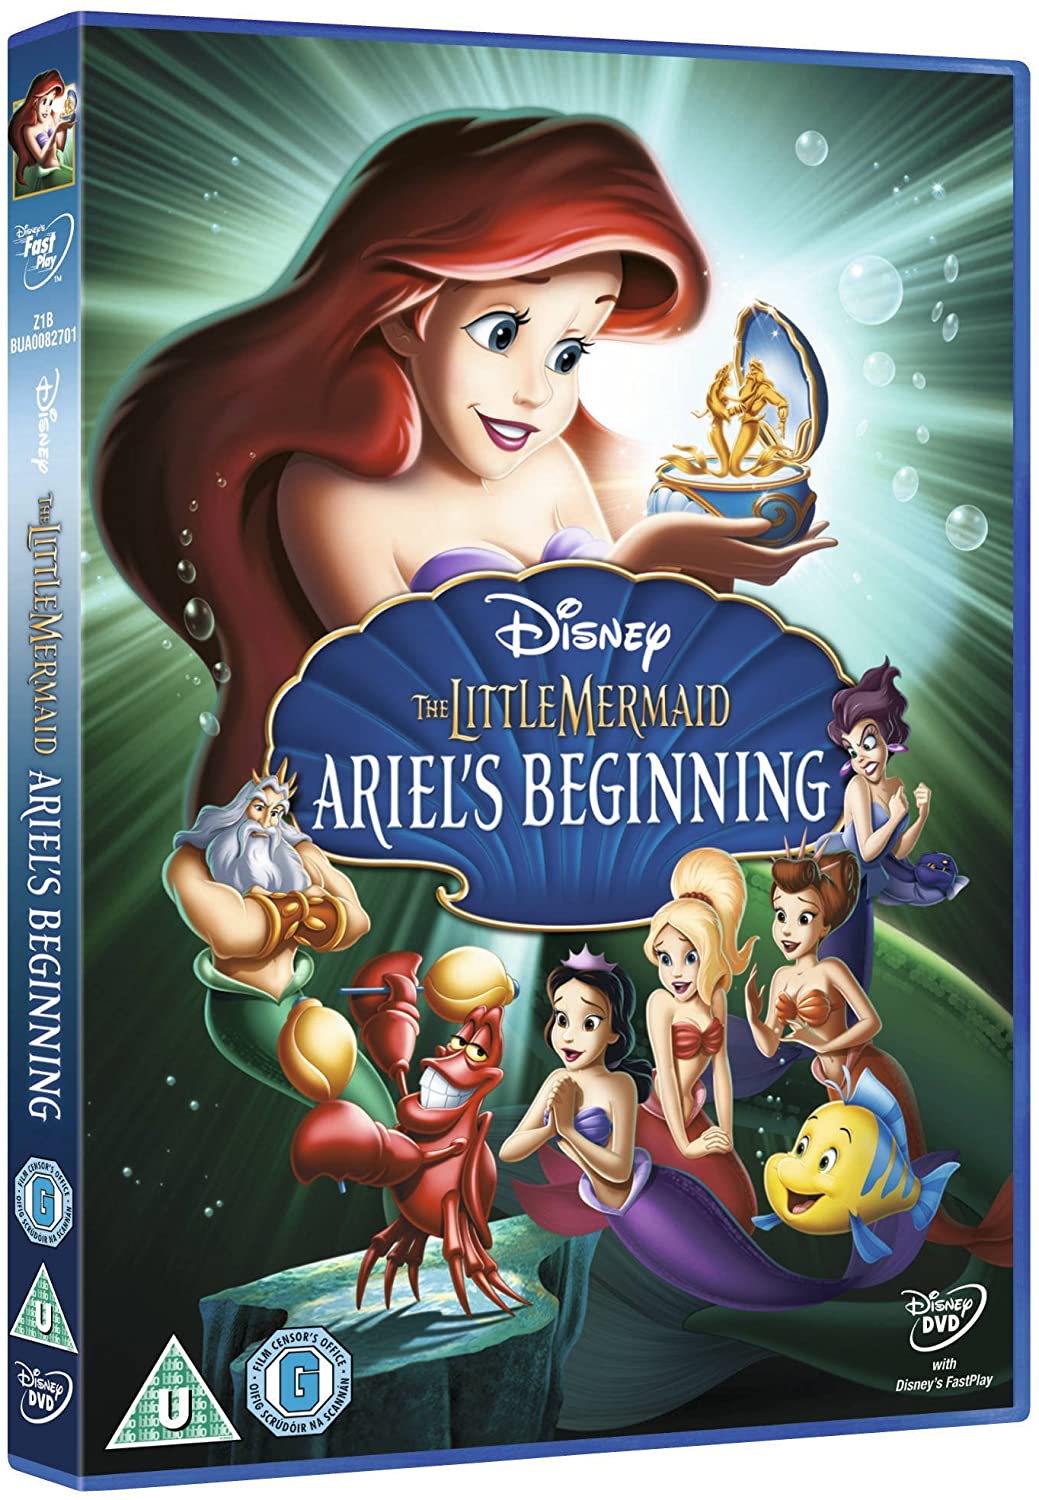 The Little Mermaid: Ariel's Beginning [DVD]